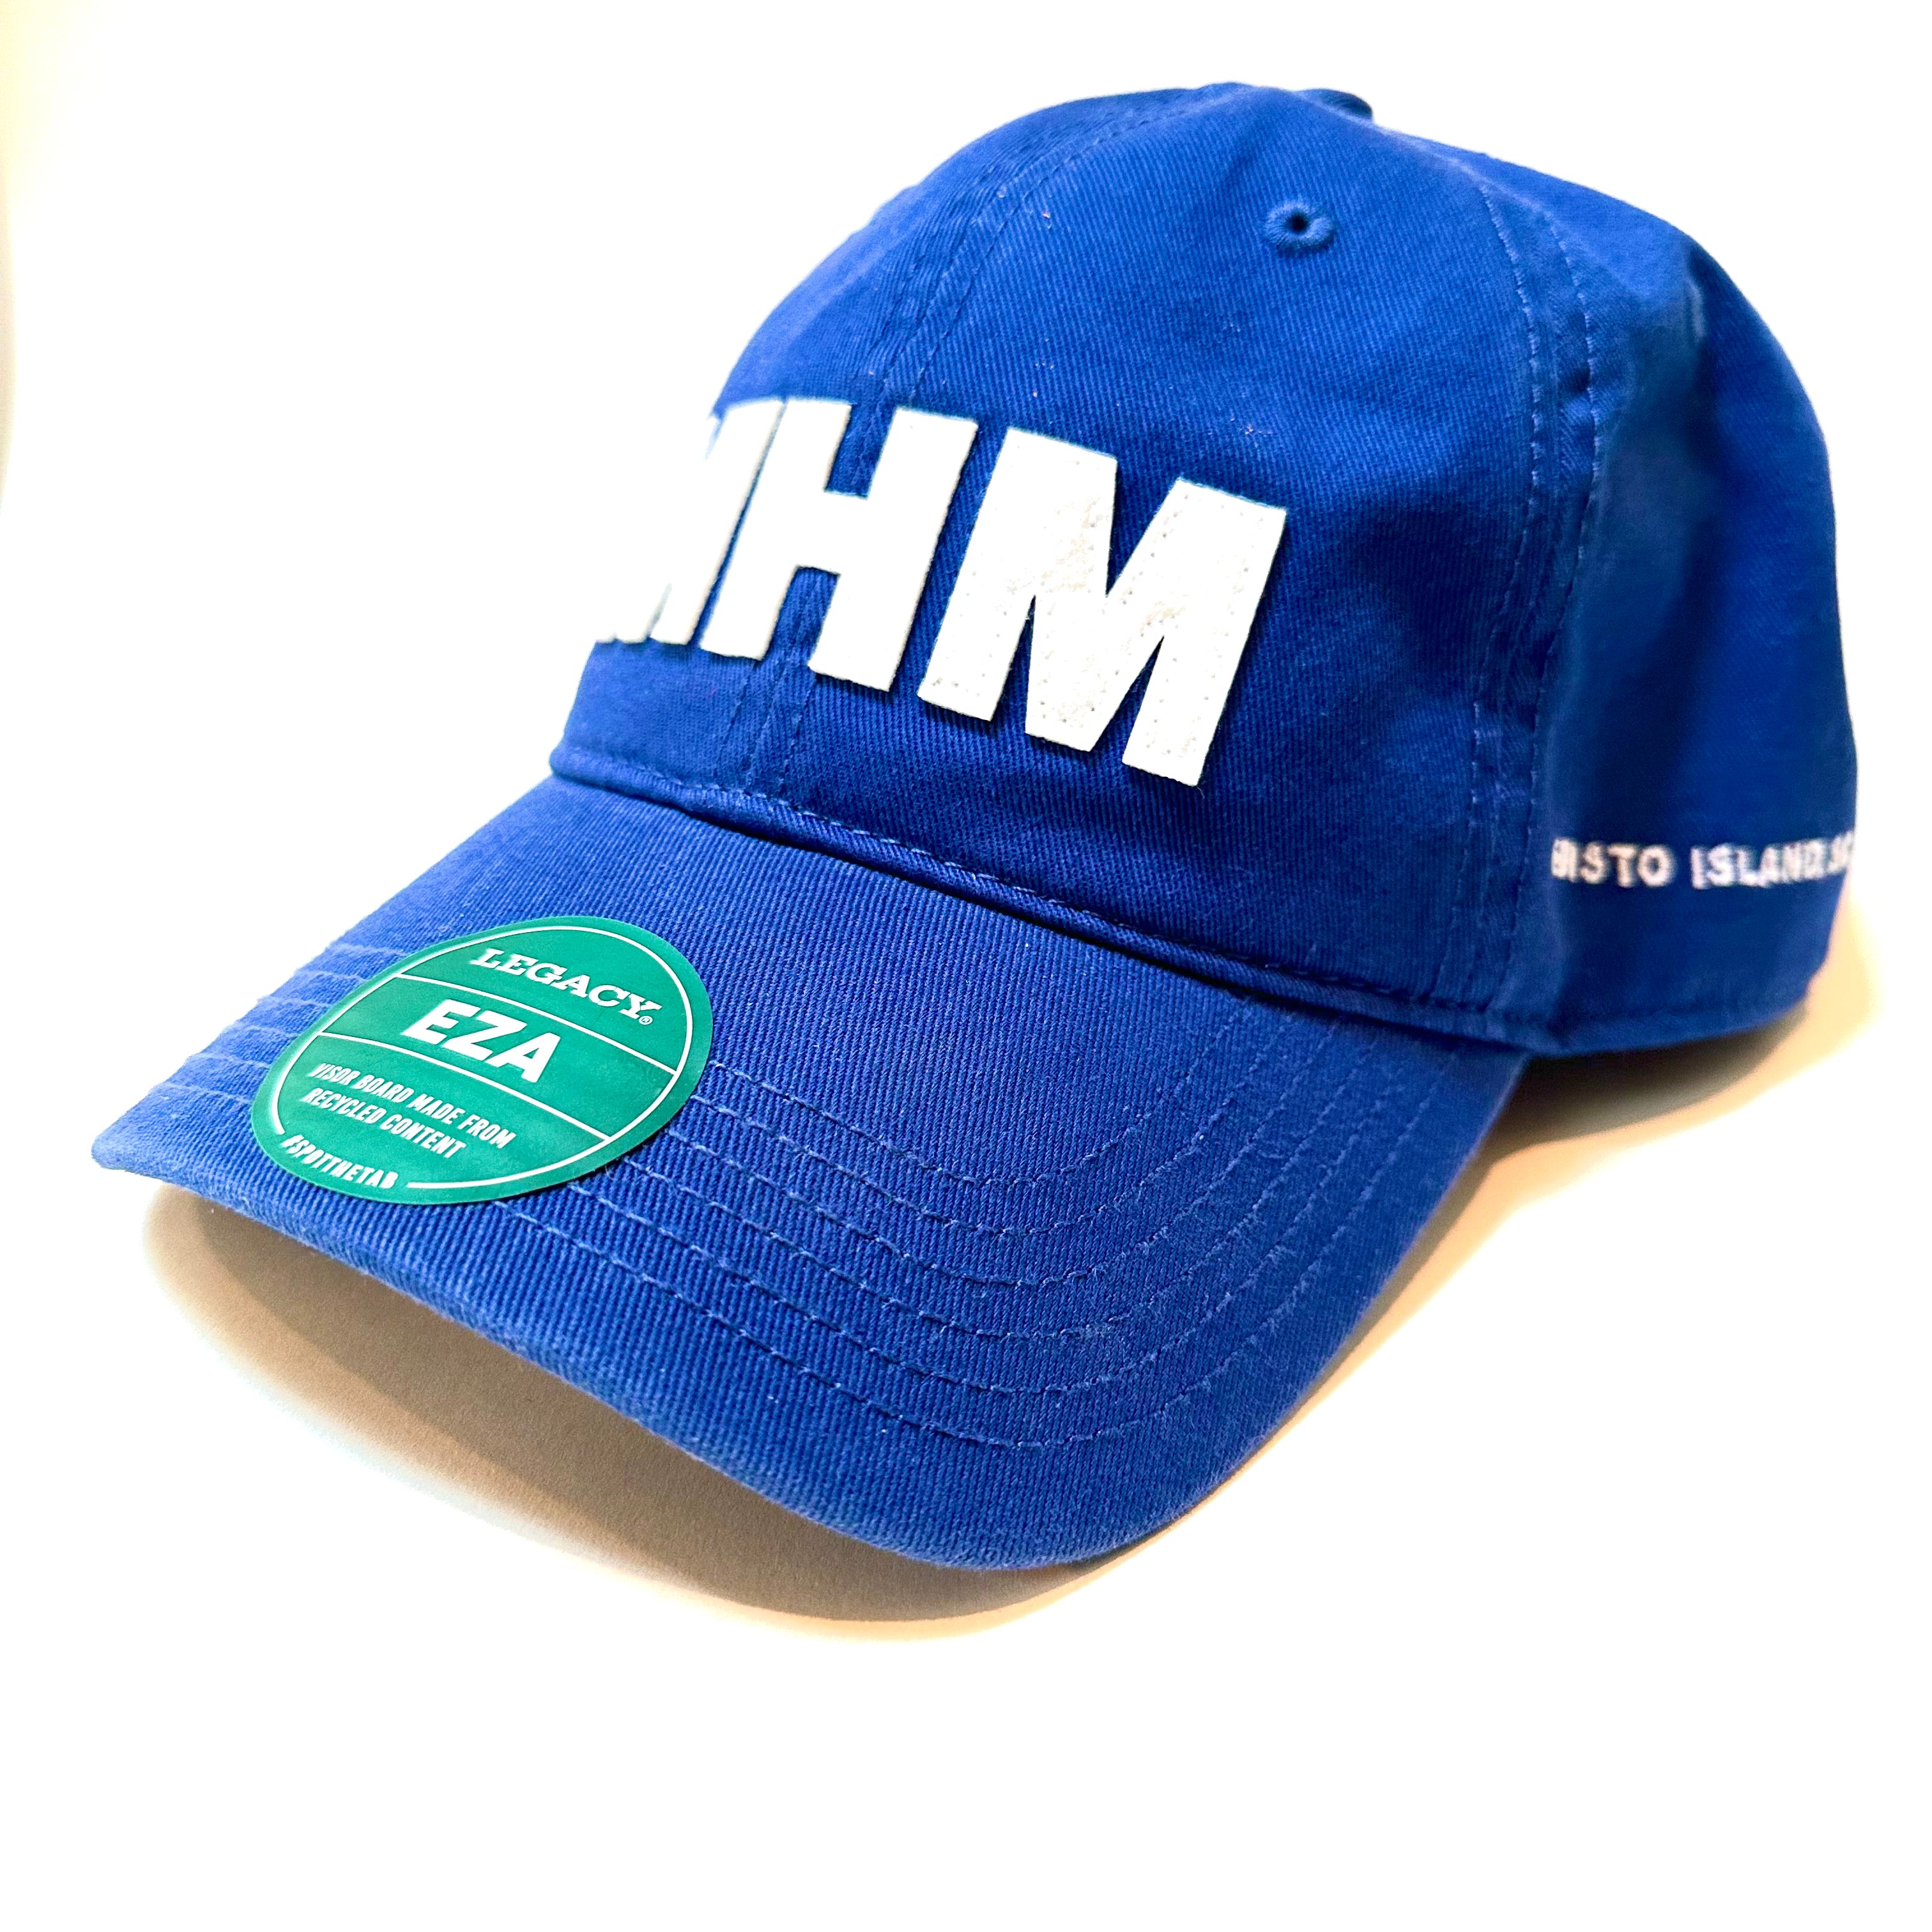 Marsh Hen Mill MHM hat